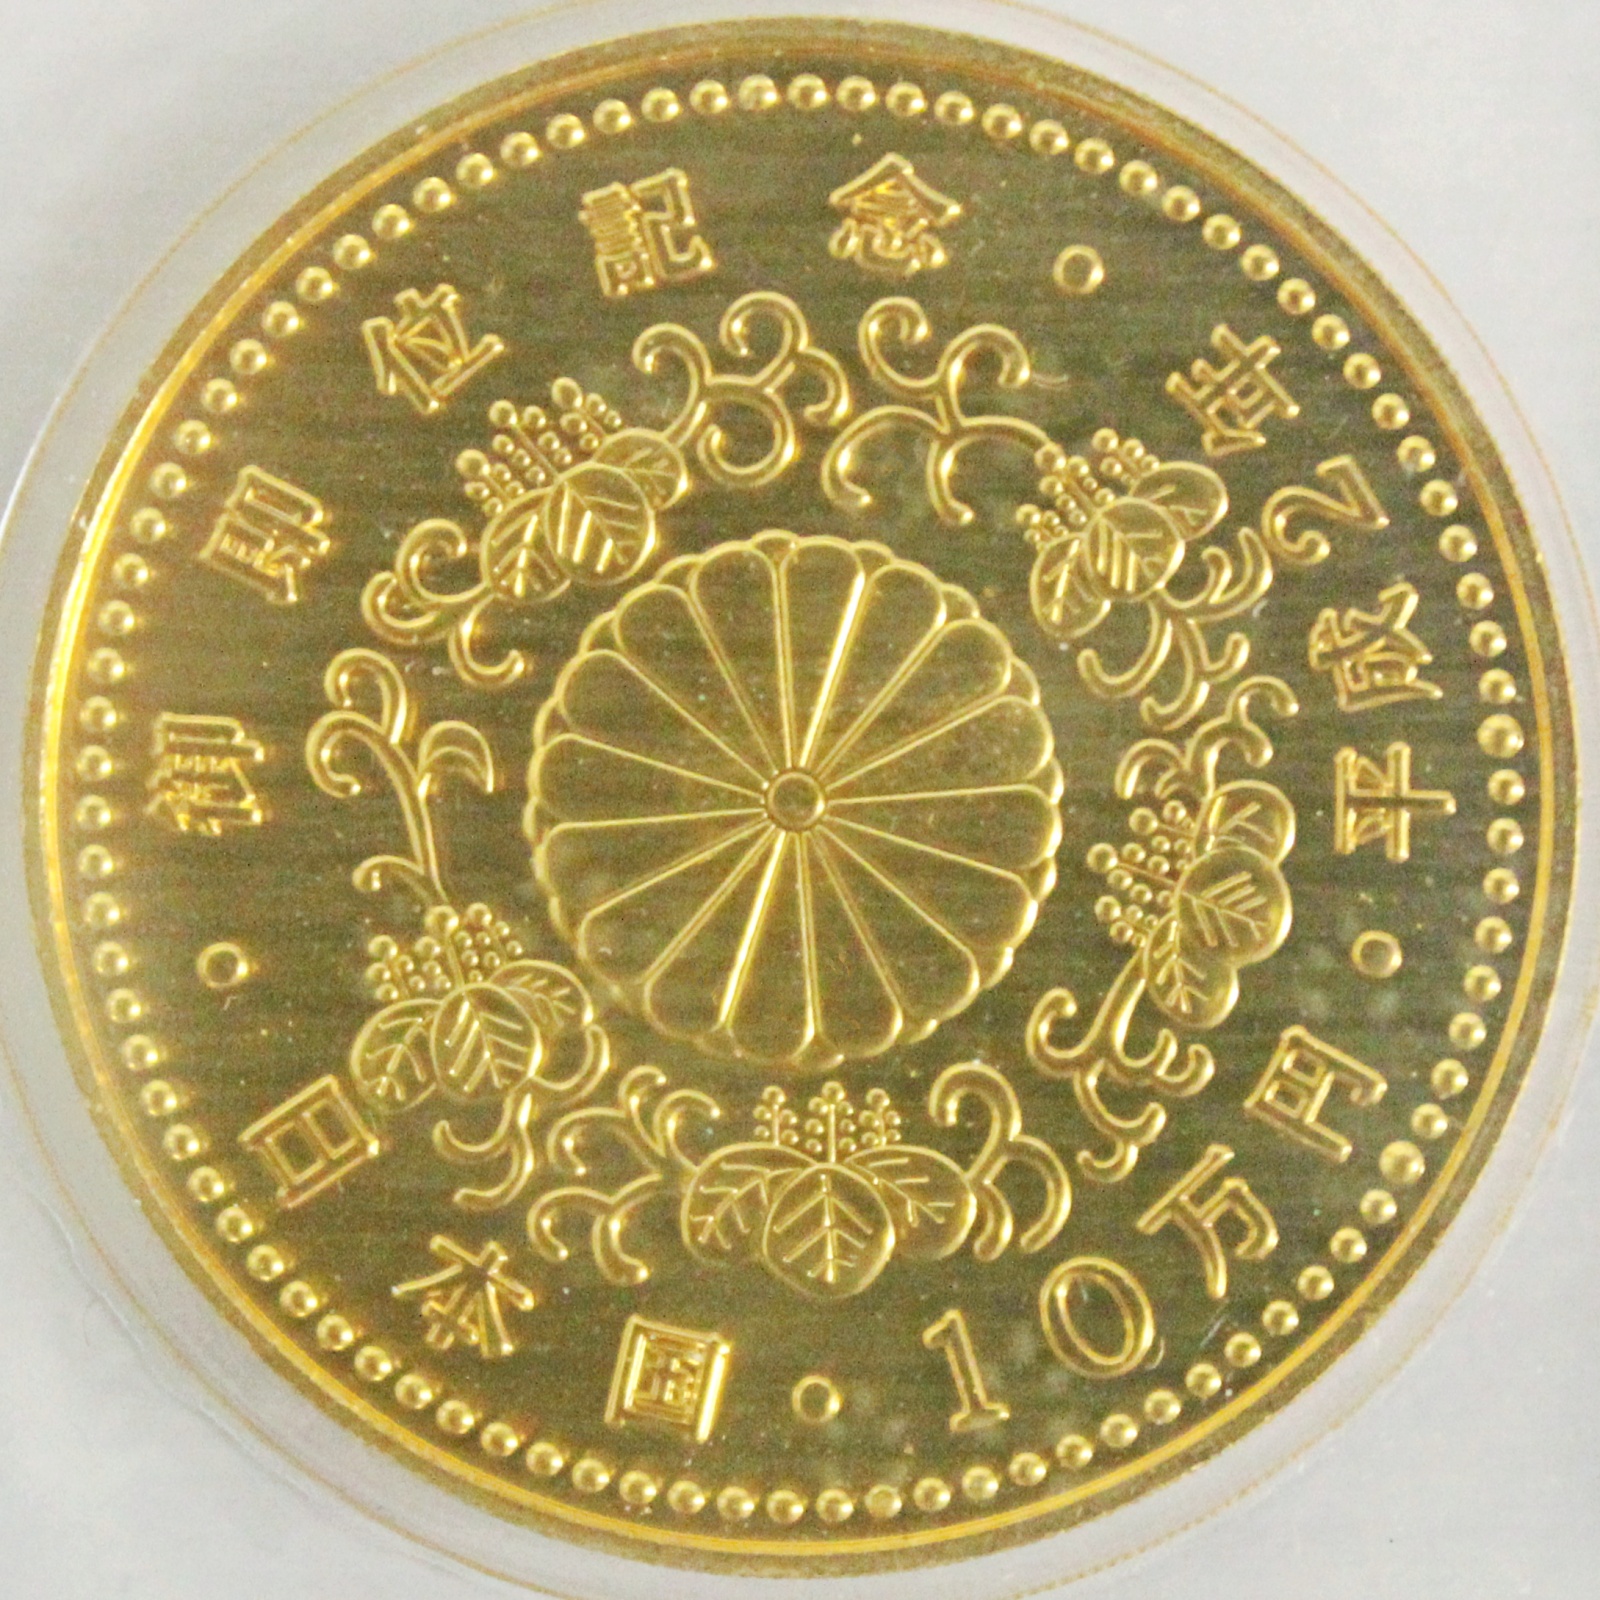 天皇陛下御即位記念貨幣セット 記念硬貨 平成2年 大蔵省造幣局 10万円金貨 500円白銅貨 ケース入り